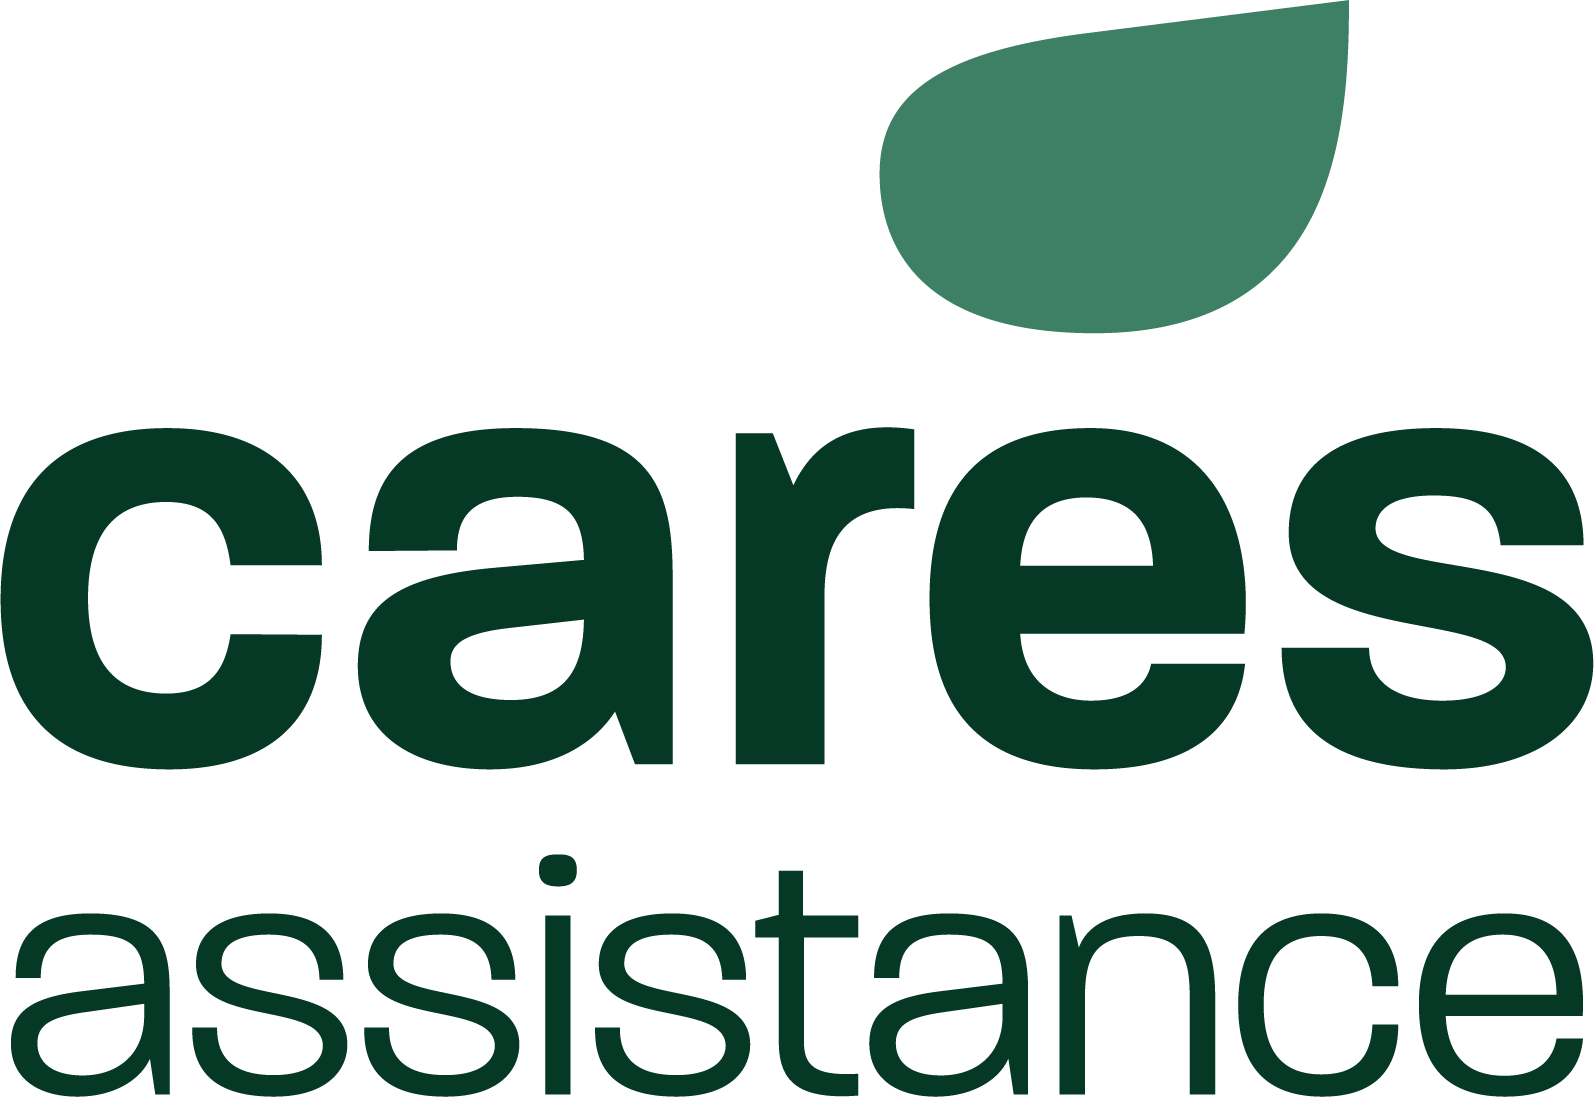 Cares Assistance